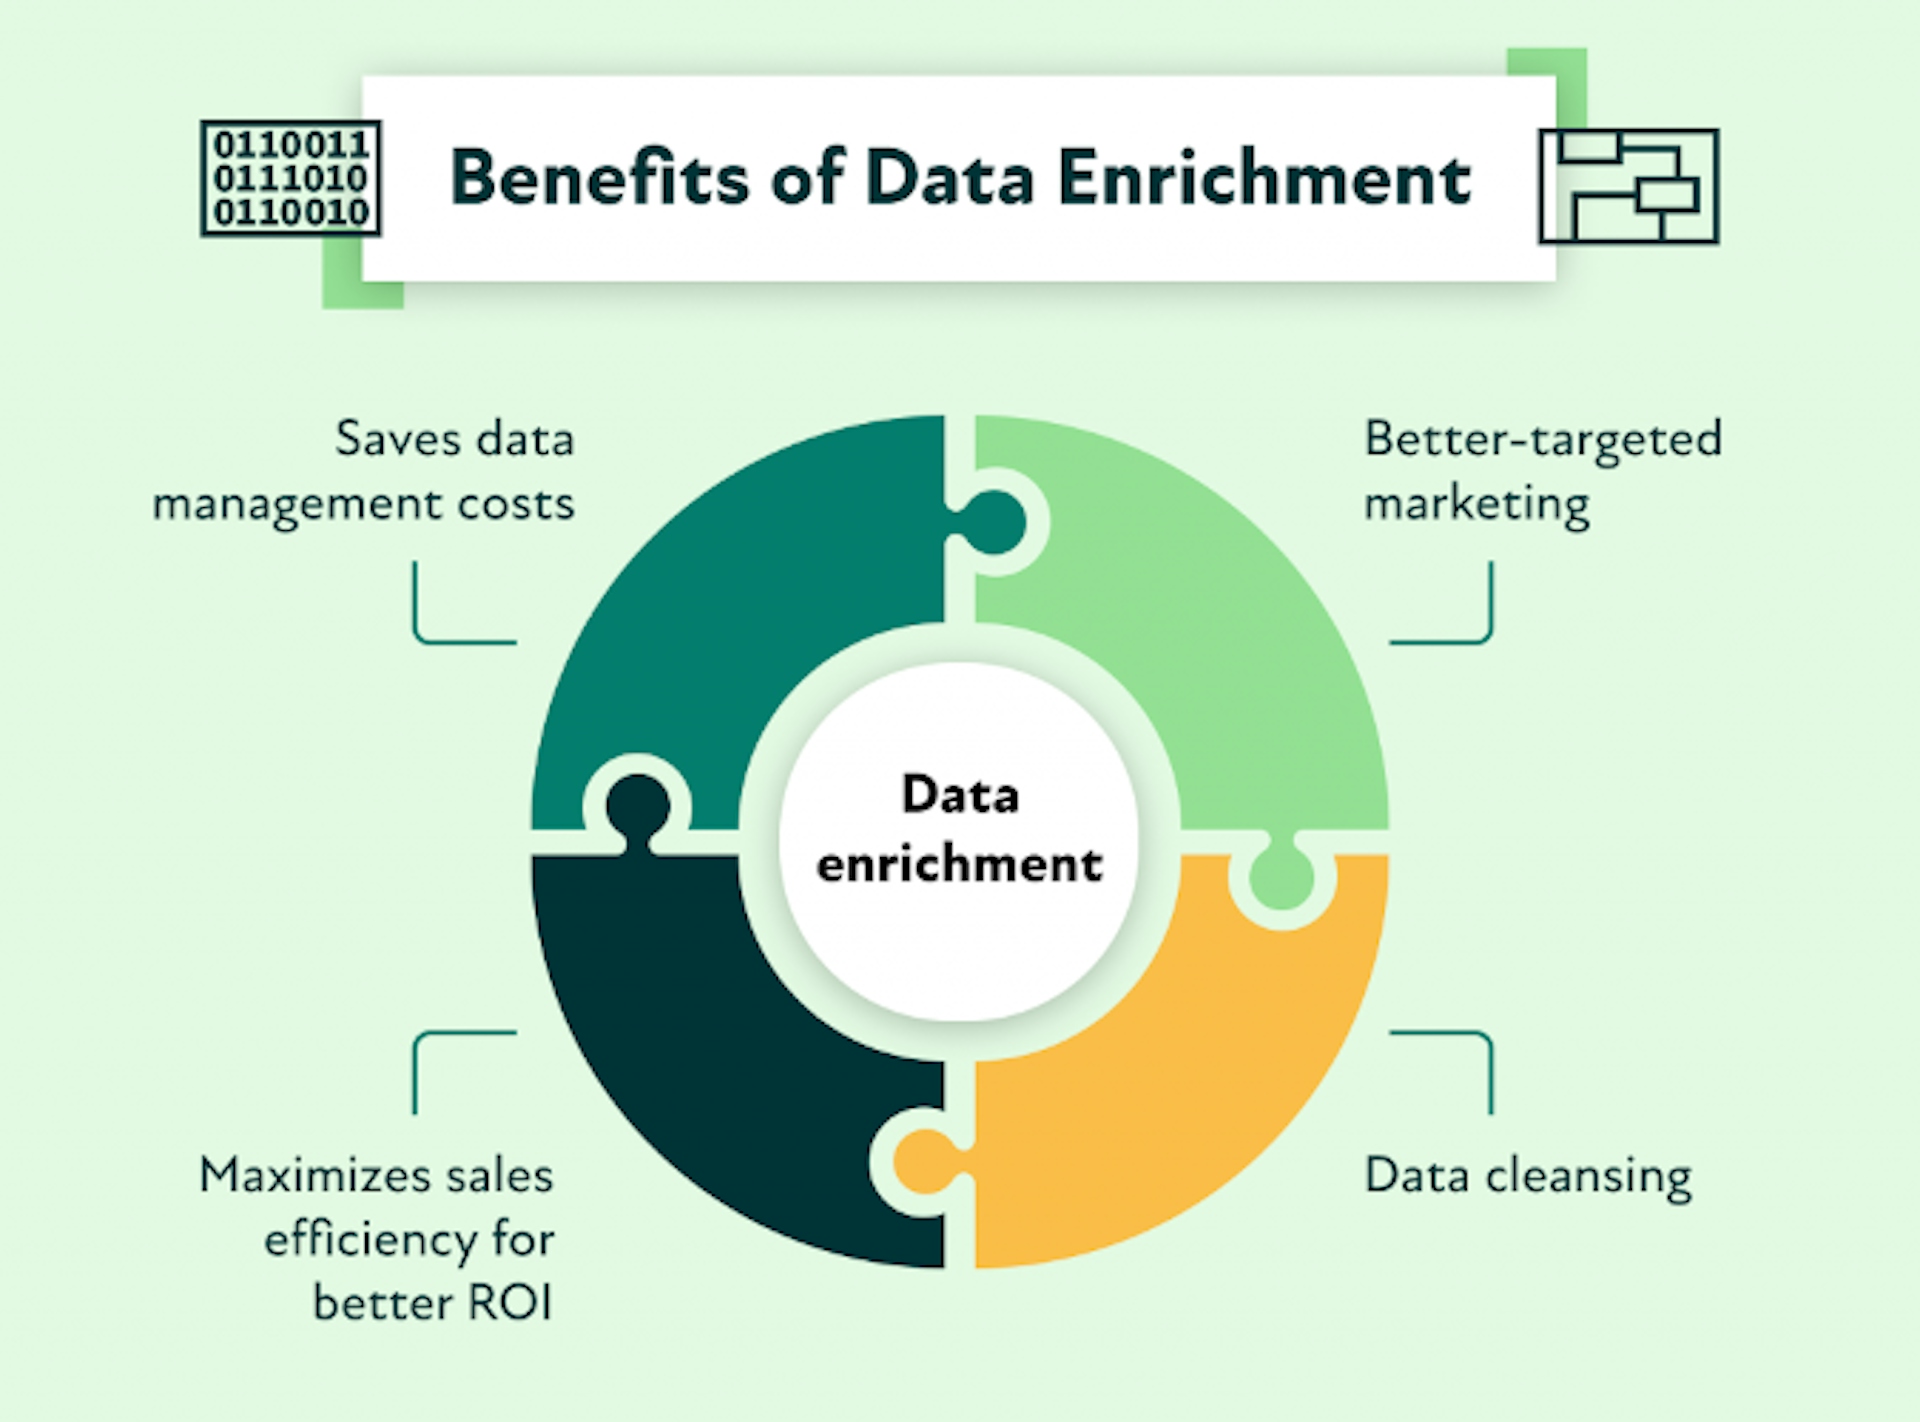 Benefits of data enrichment